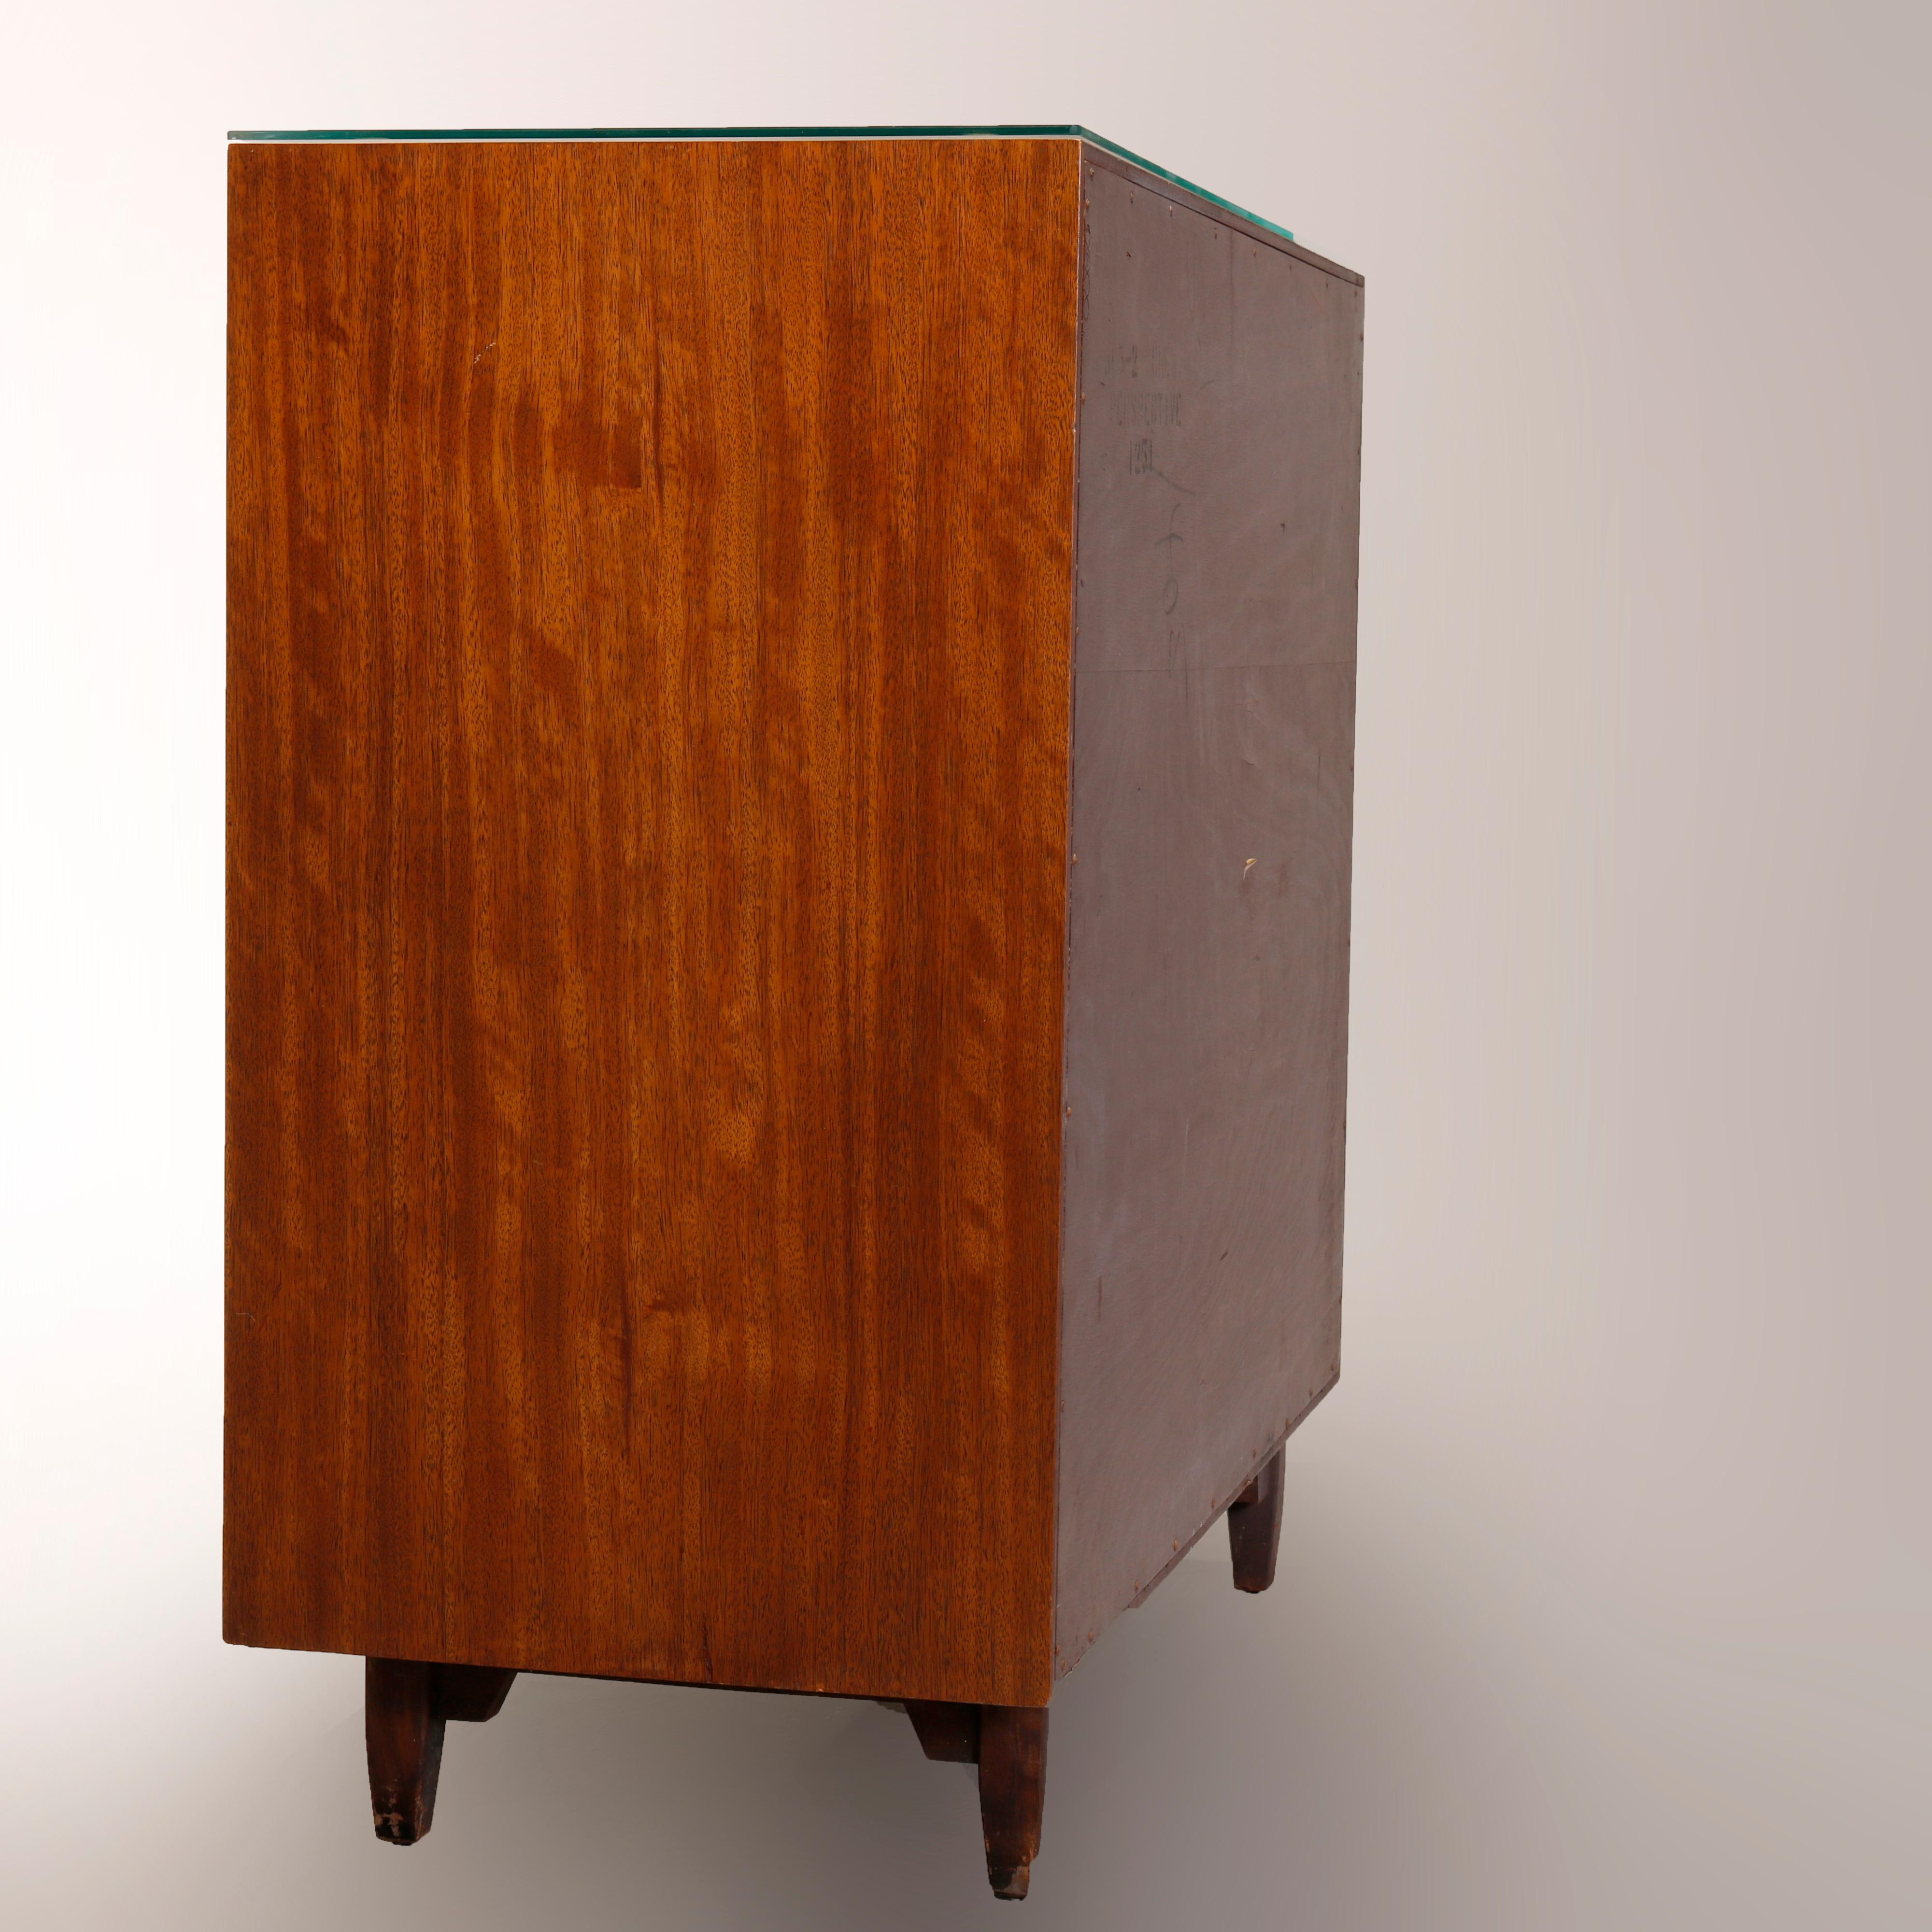 Carved Mid-Century Modern Drexel Walnut Five-Drawer Dresser, Perspective, 20th Century